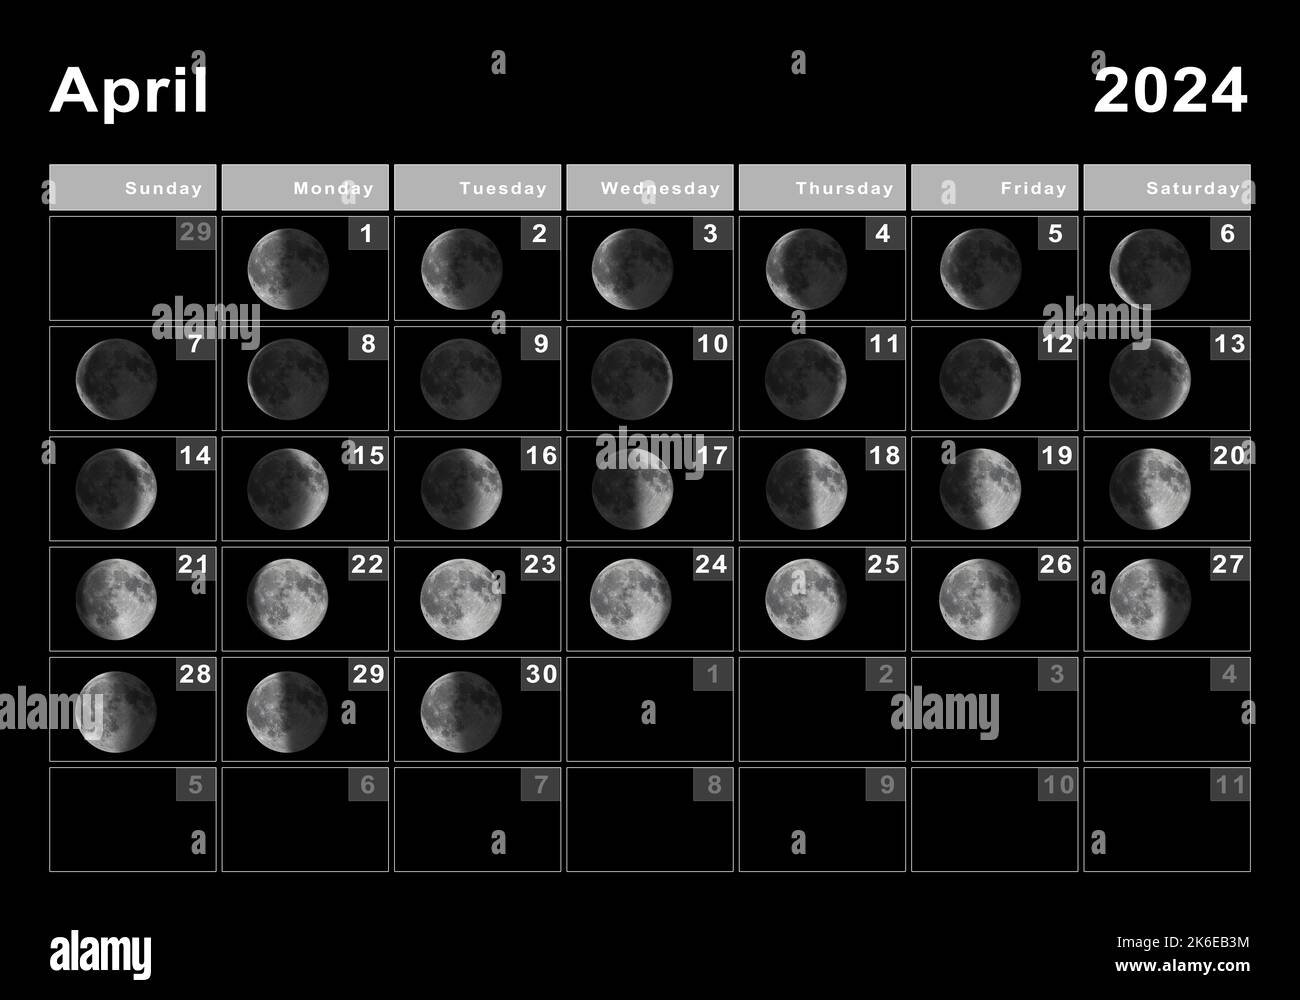 April 2024 Lunar Calendar, Moon Cycles, Moon Phases Stock Photo inside Lunar Calendar April 2024